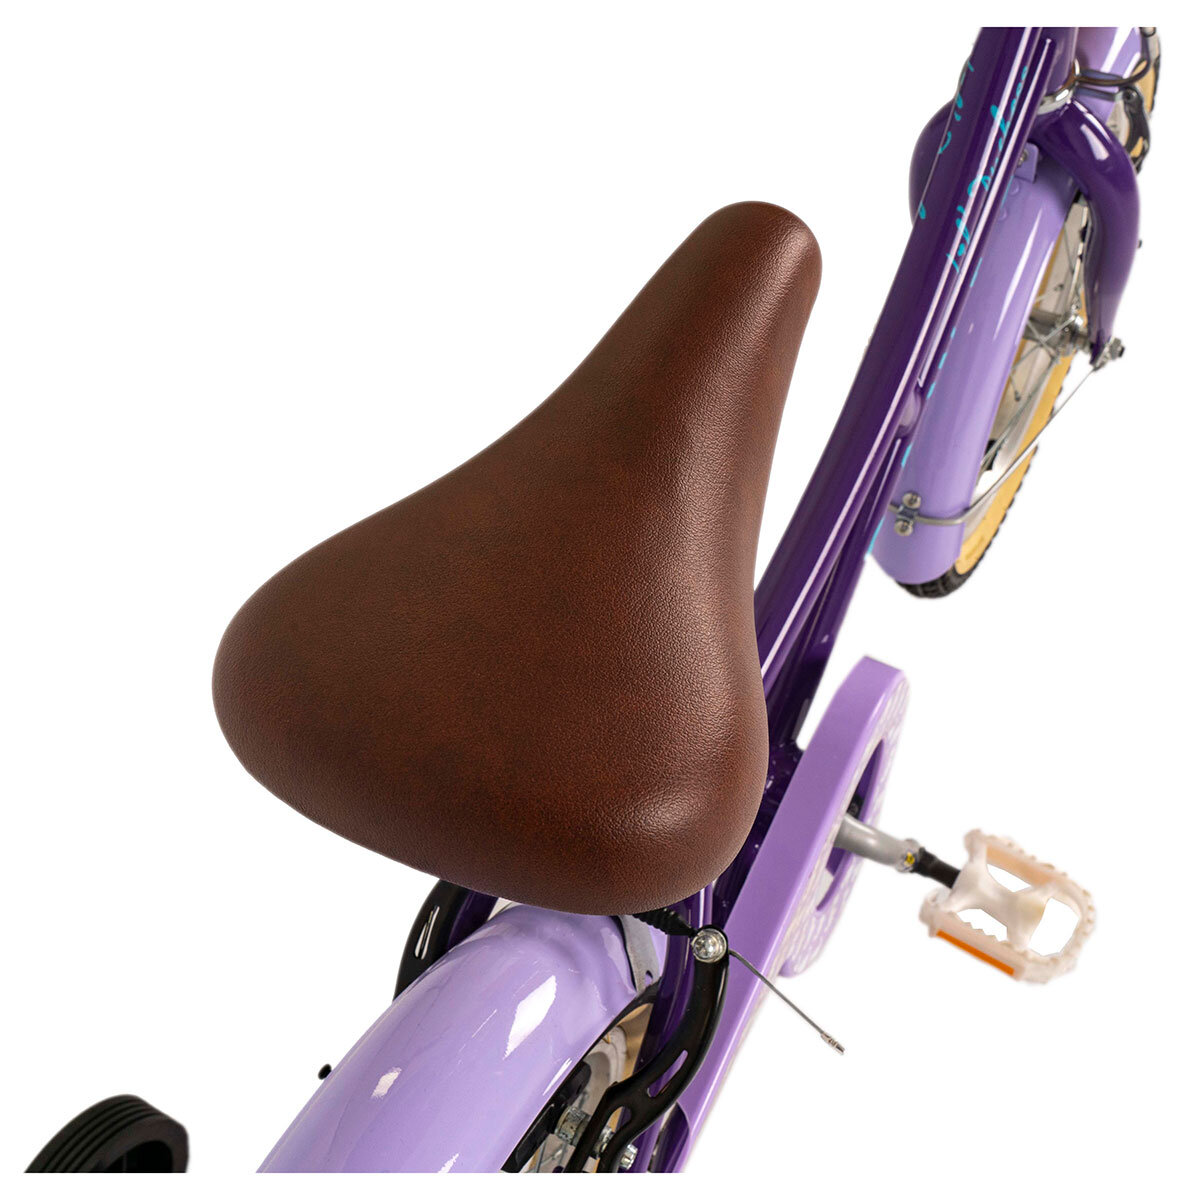 Dawes Lil Duchess Junior Bike 16" Wheel (10" Frame) in Purple